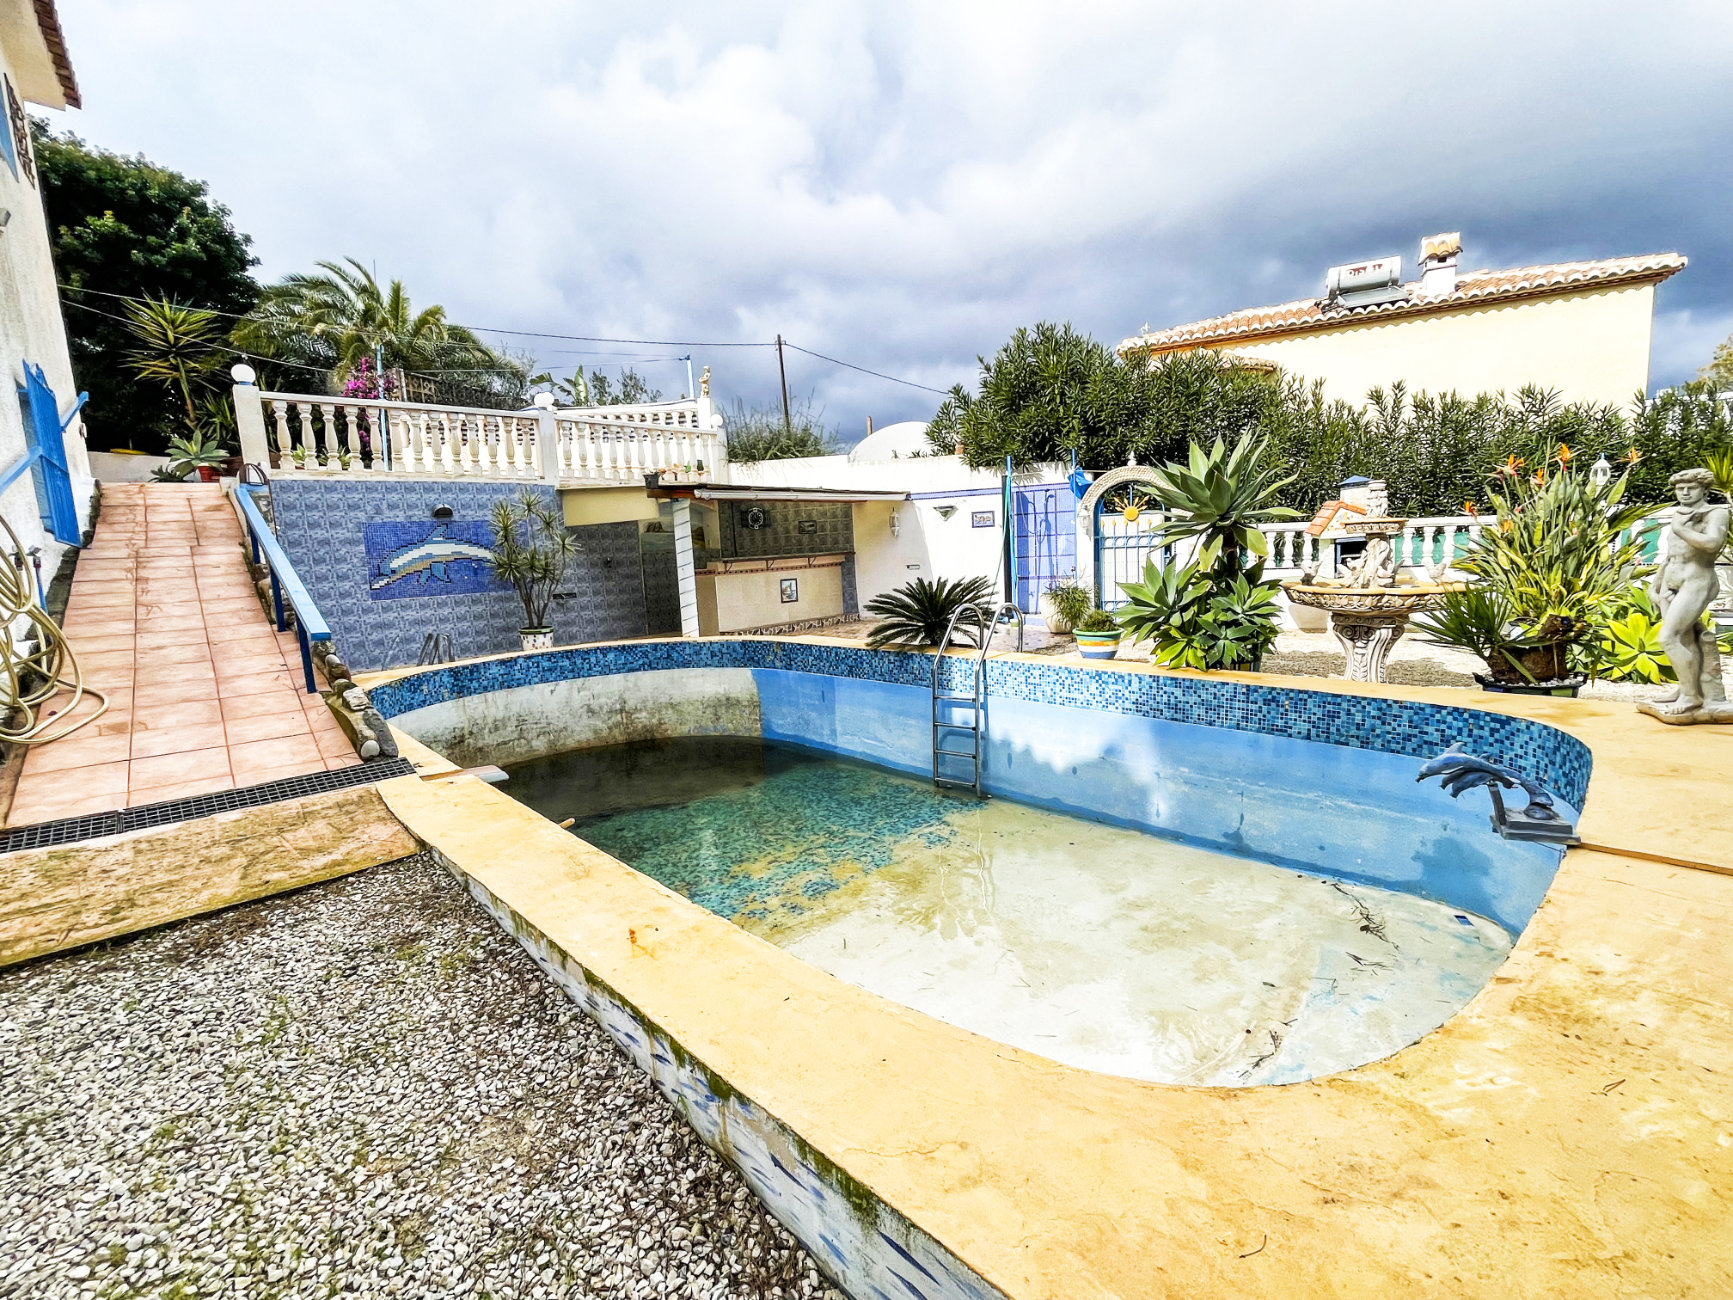 Villa in need of TLC for sale in Cap Blanc, Moraira